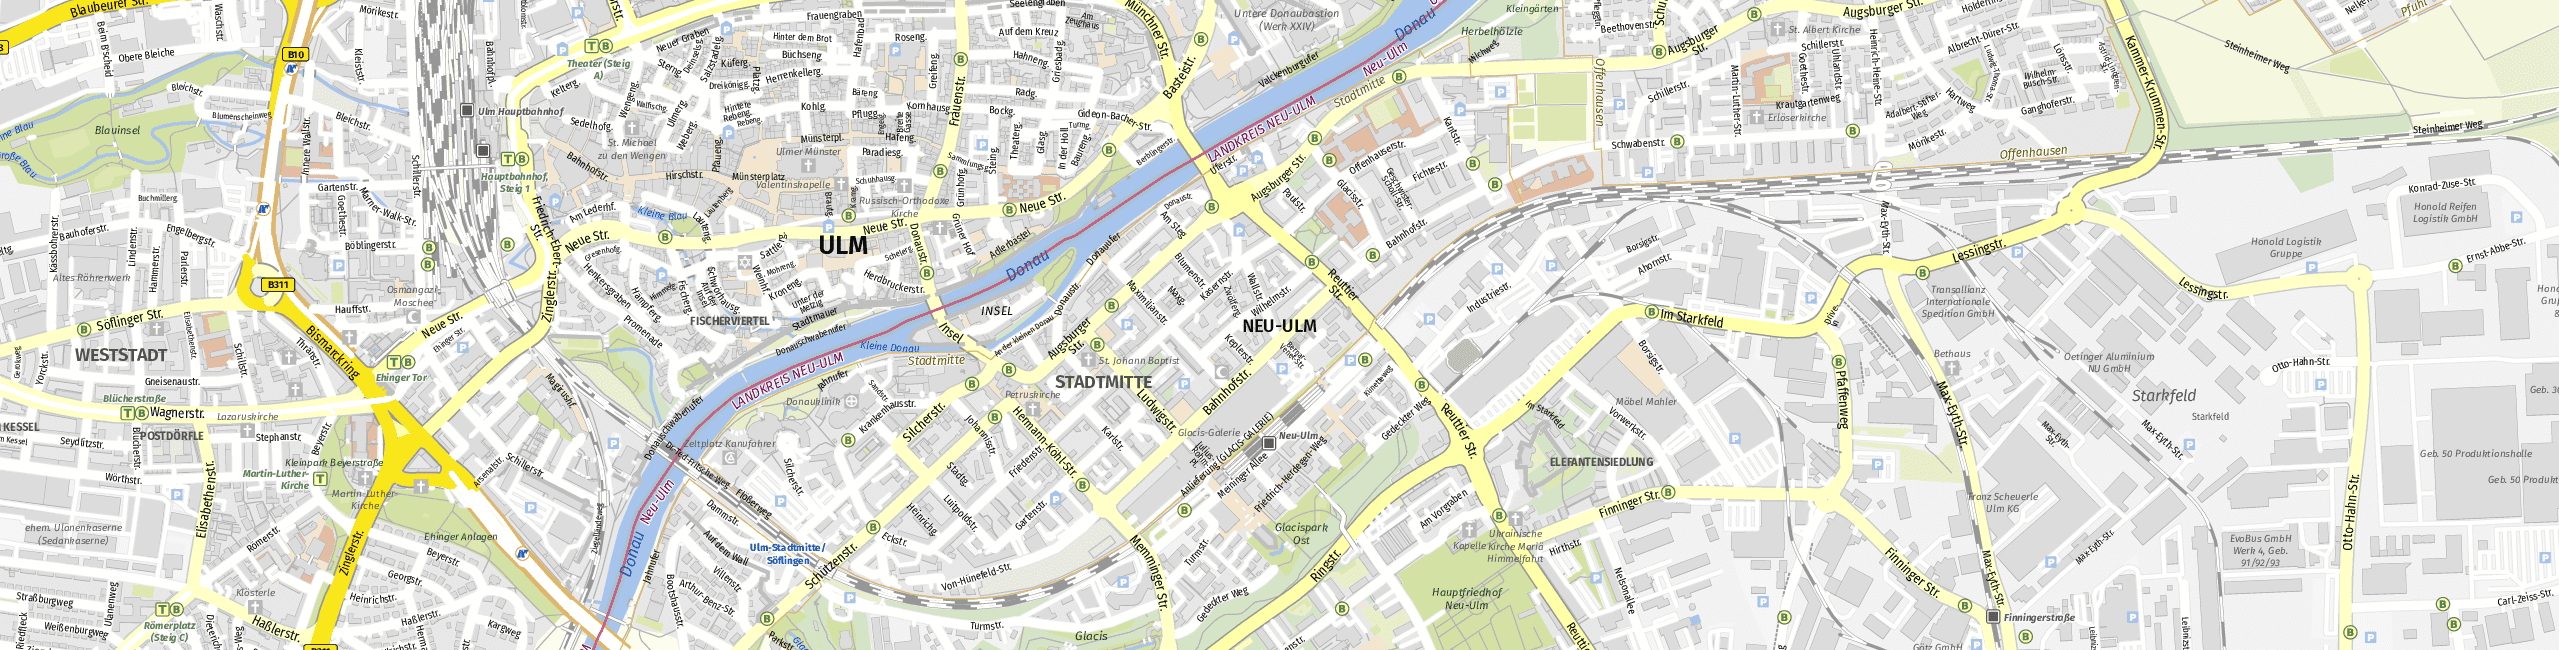 Stadtplan Neu-Ulm zum Downloaden.